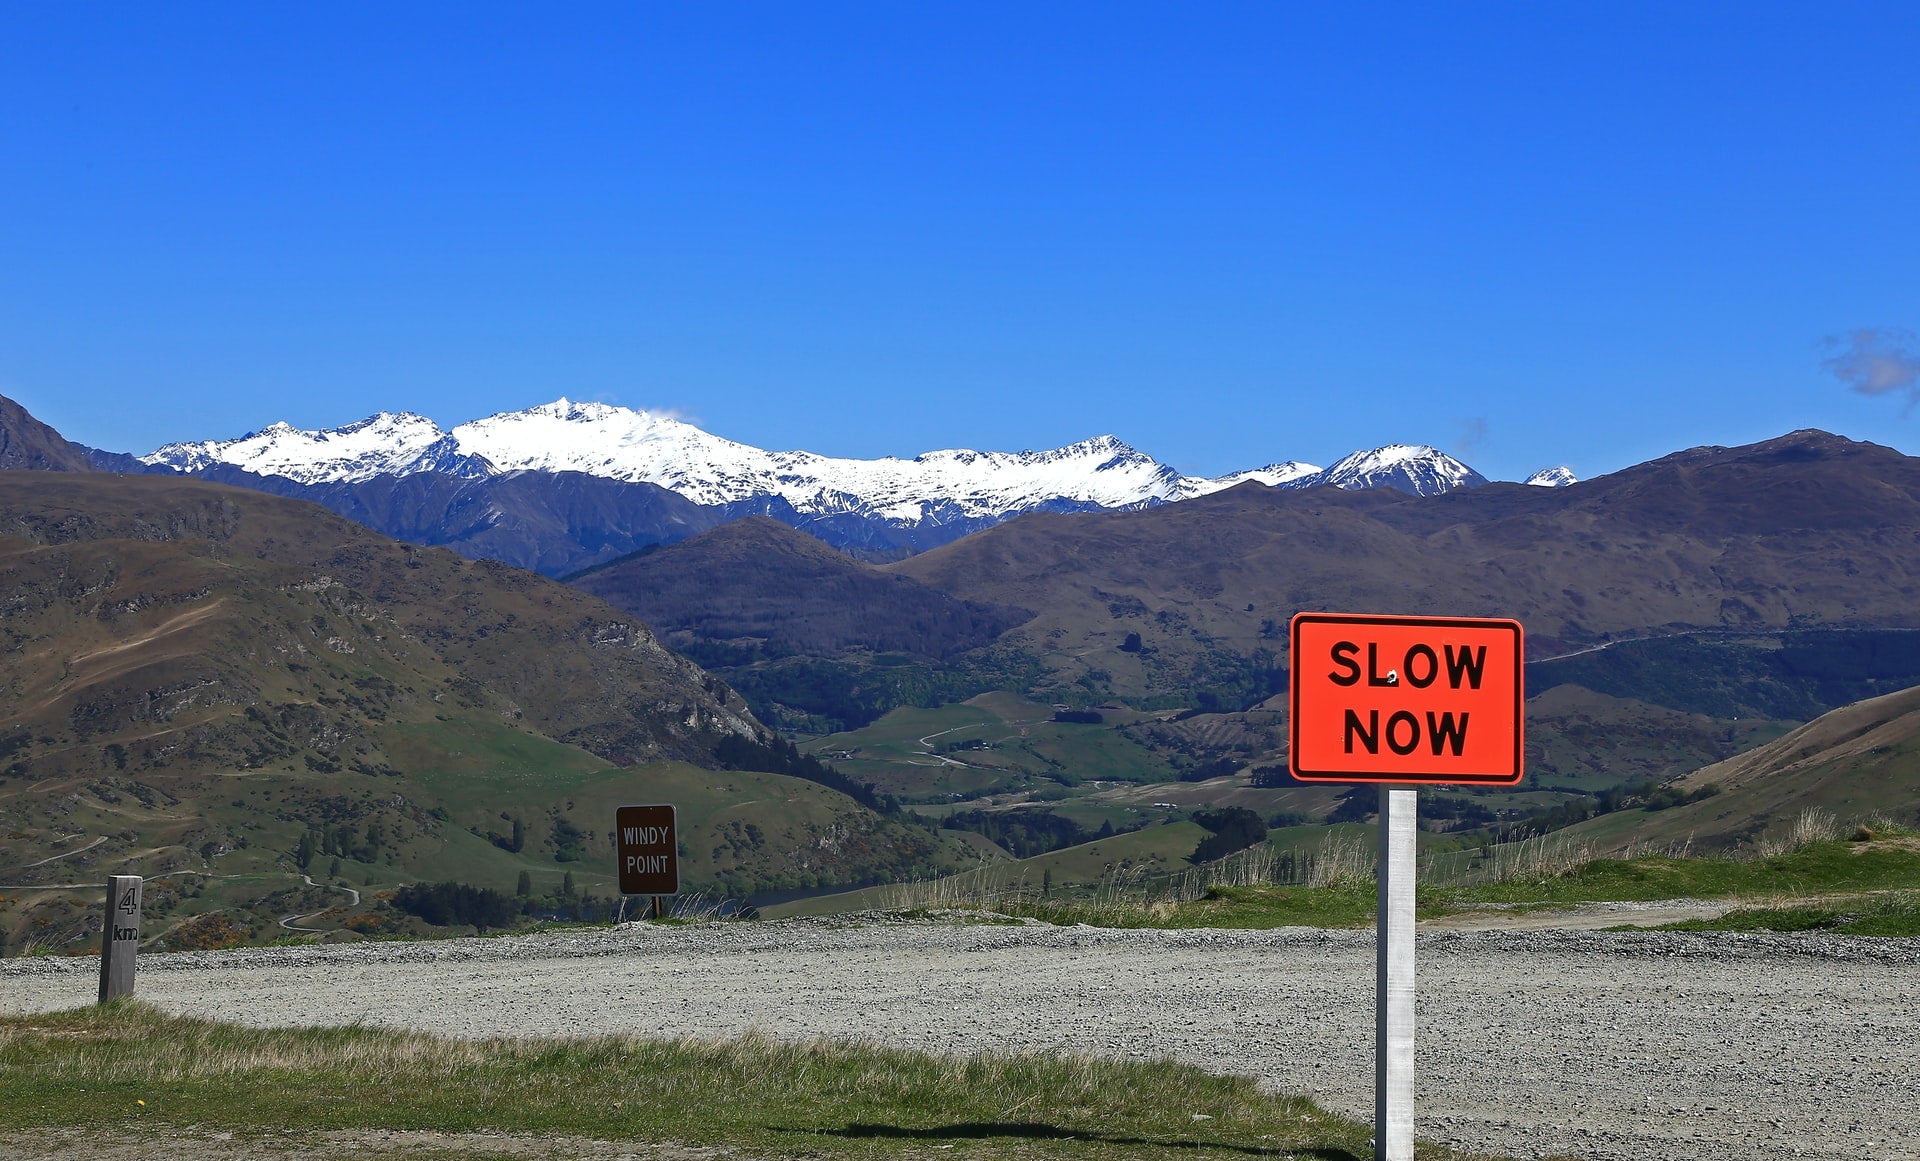 slow down sign in mountainous area